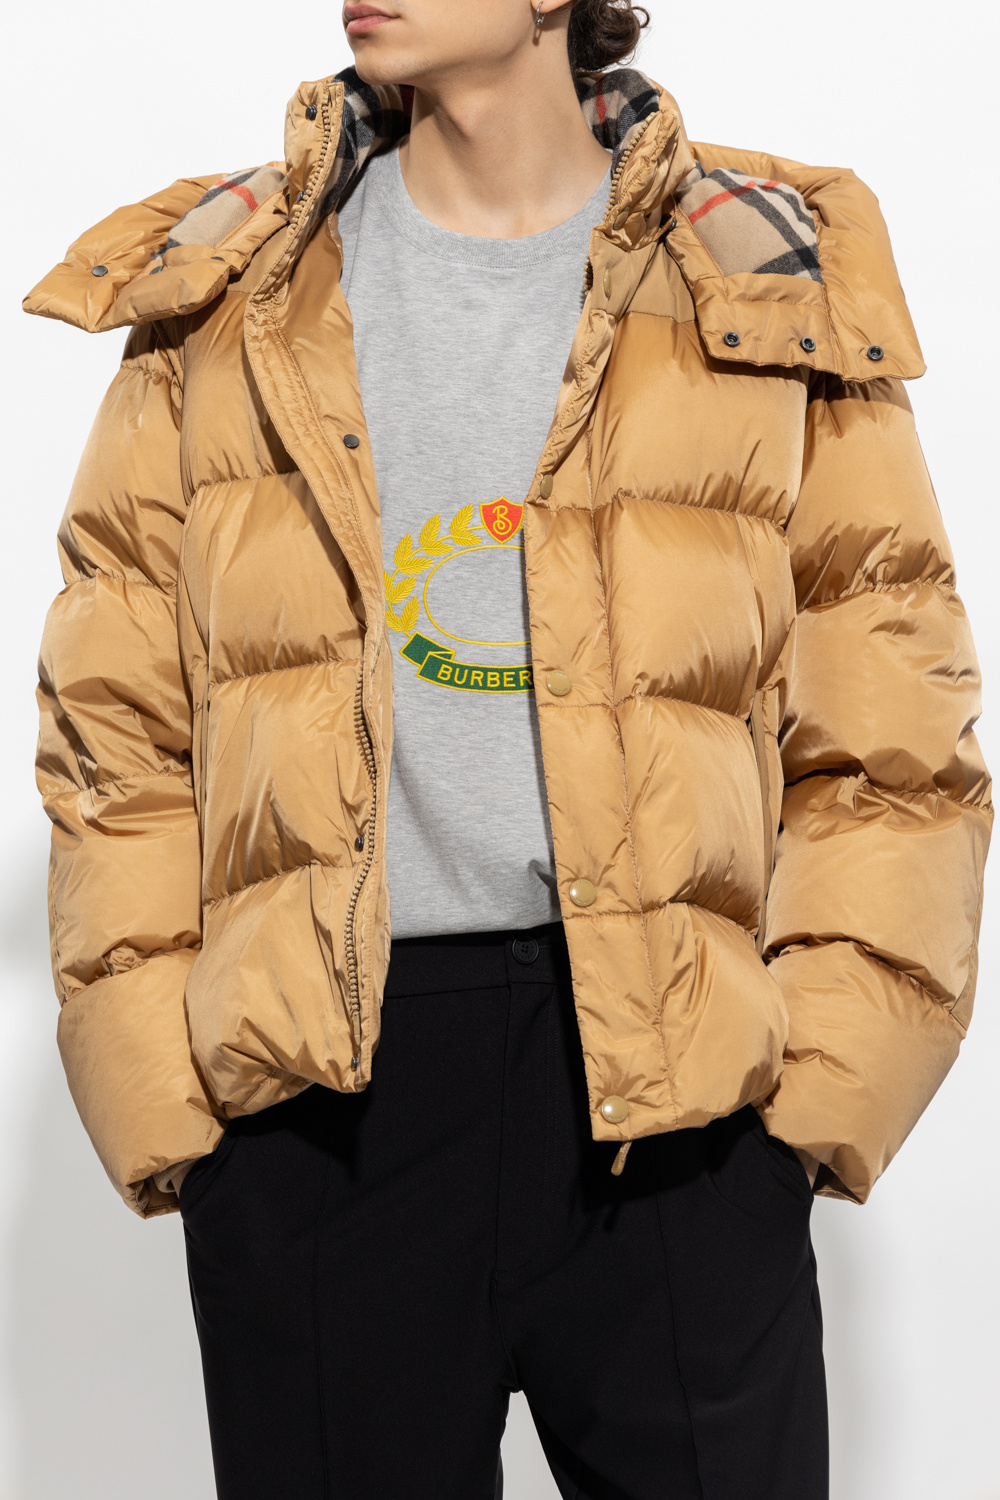 Burberry ‘Leeds’ jacket with detachable sleeves